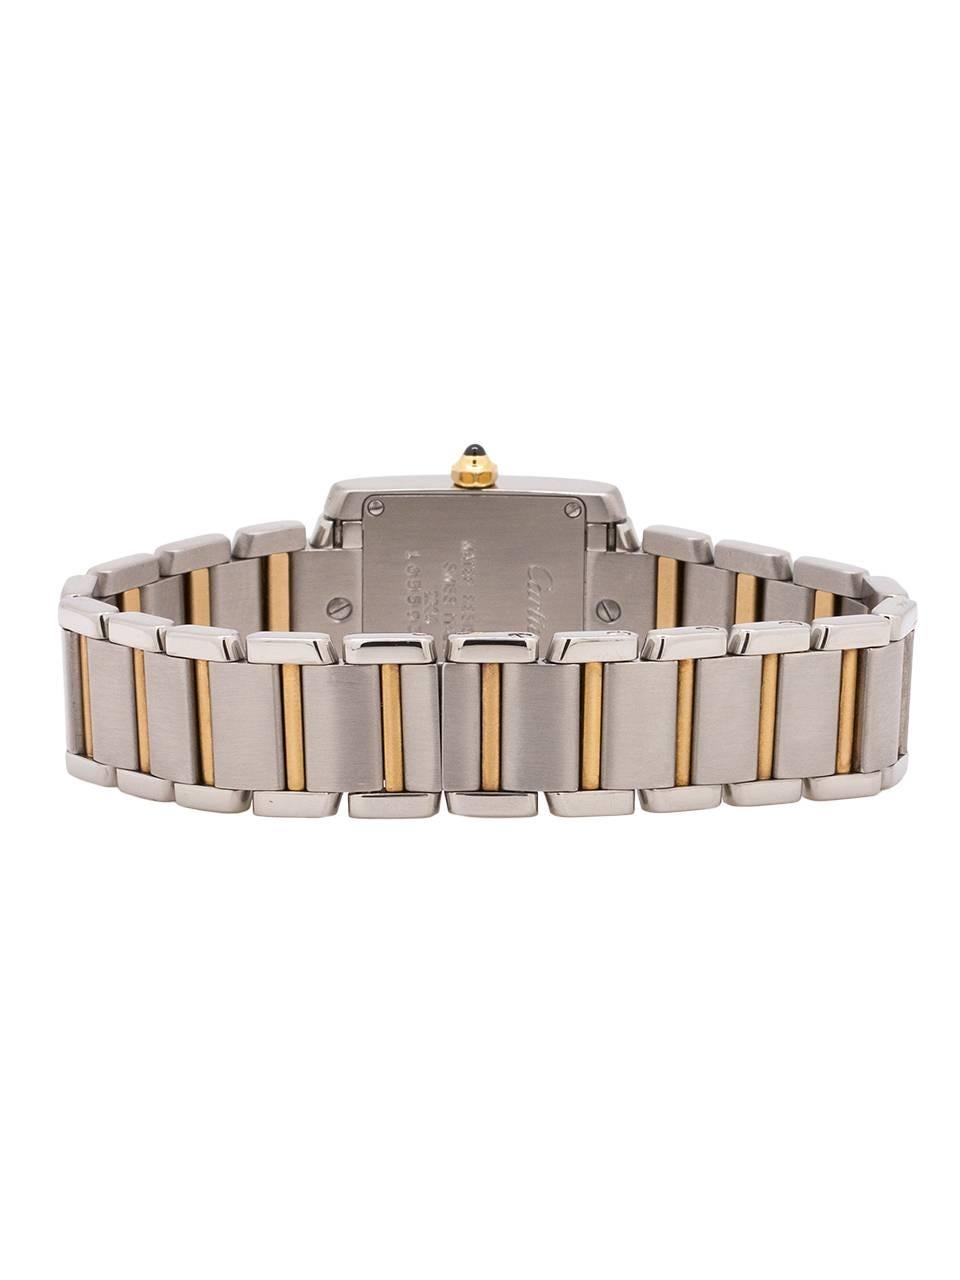 Women's Cartier Ladies yellow gold stainless steel Tank Francaise quartz wristwatch 